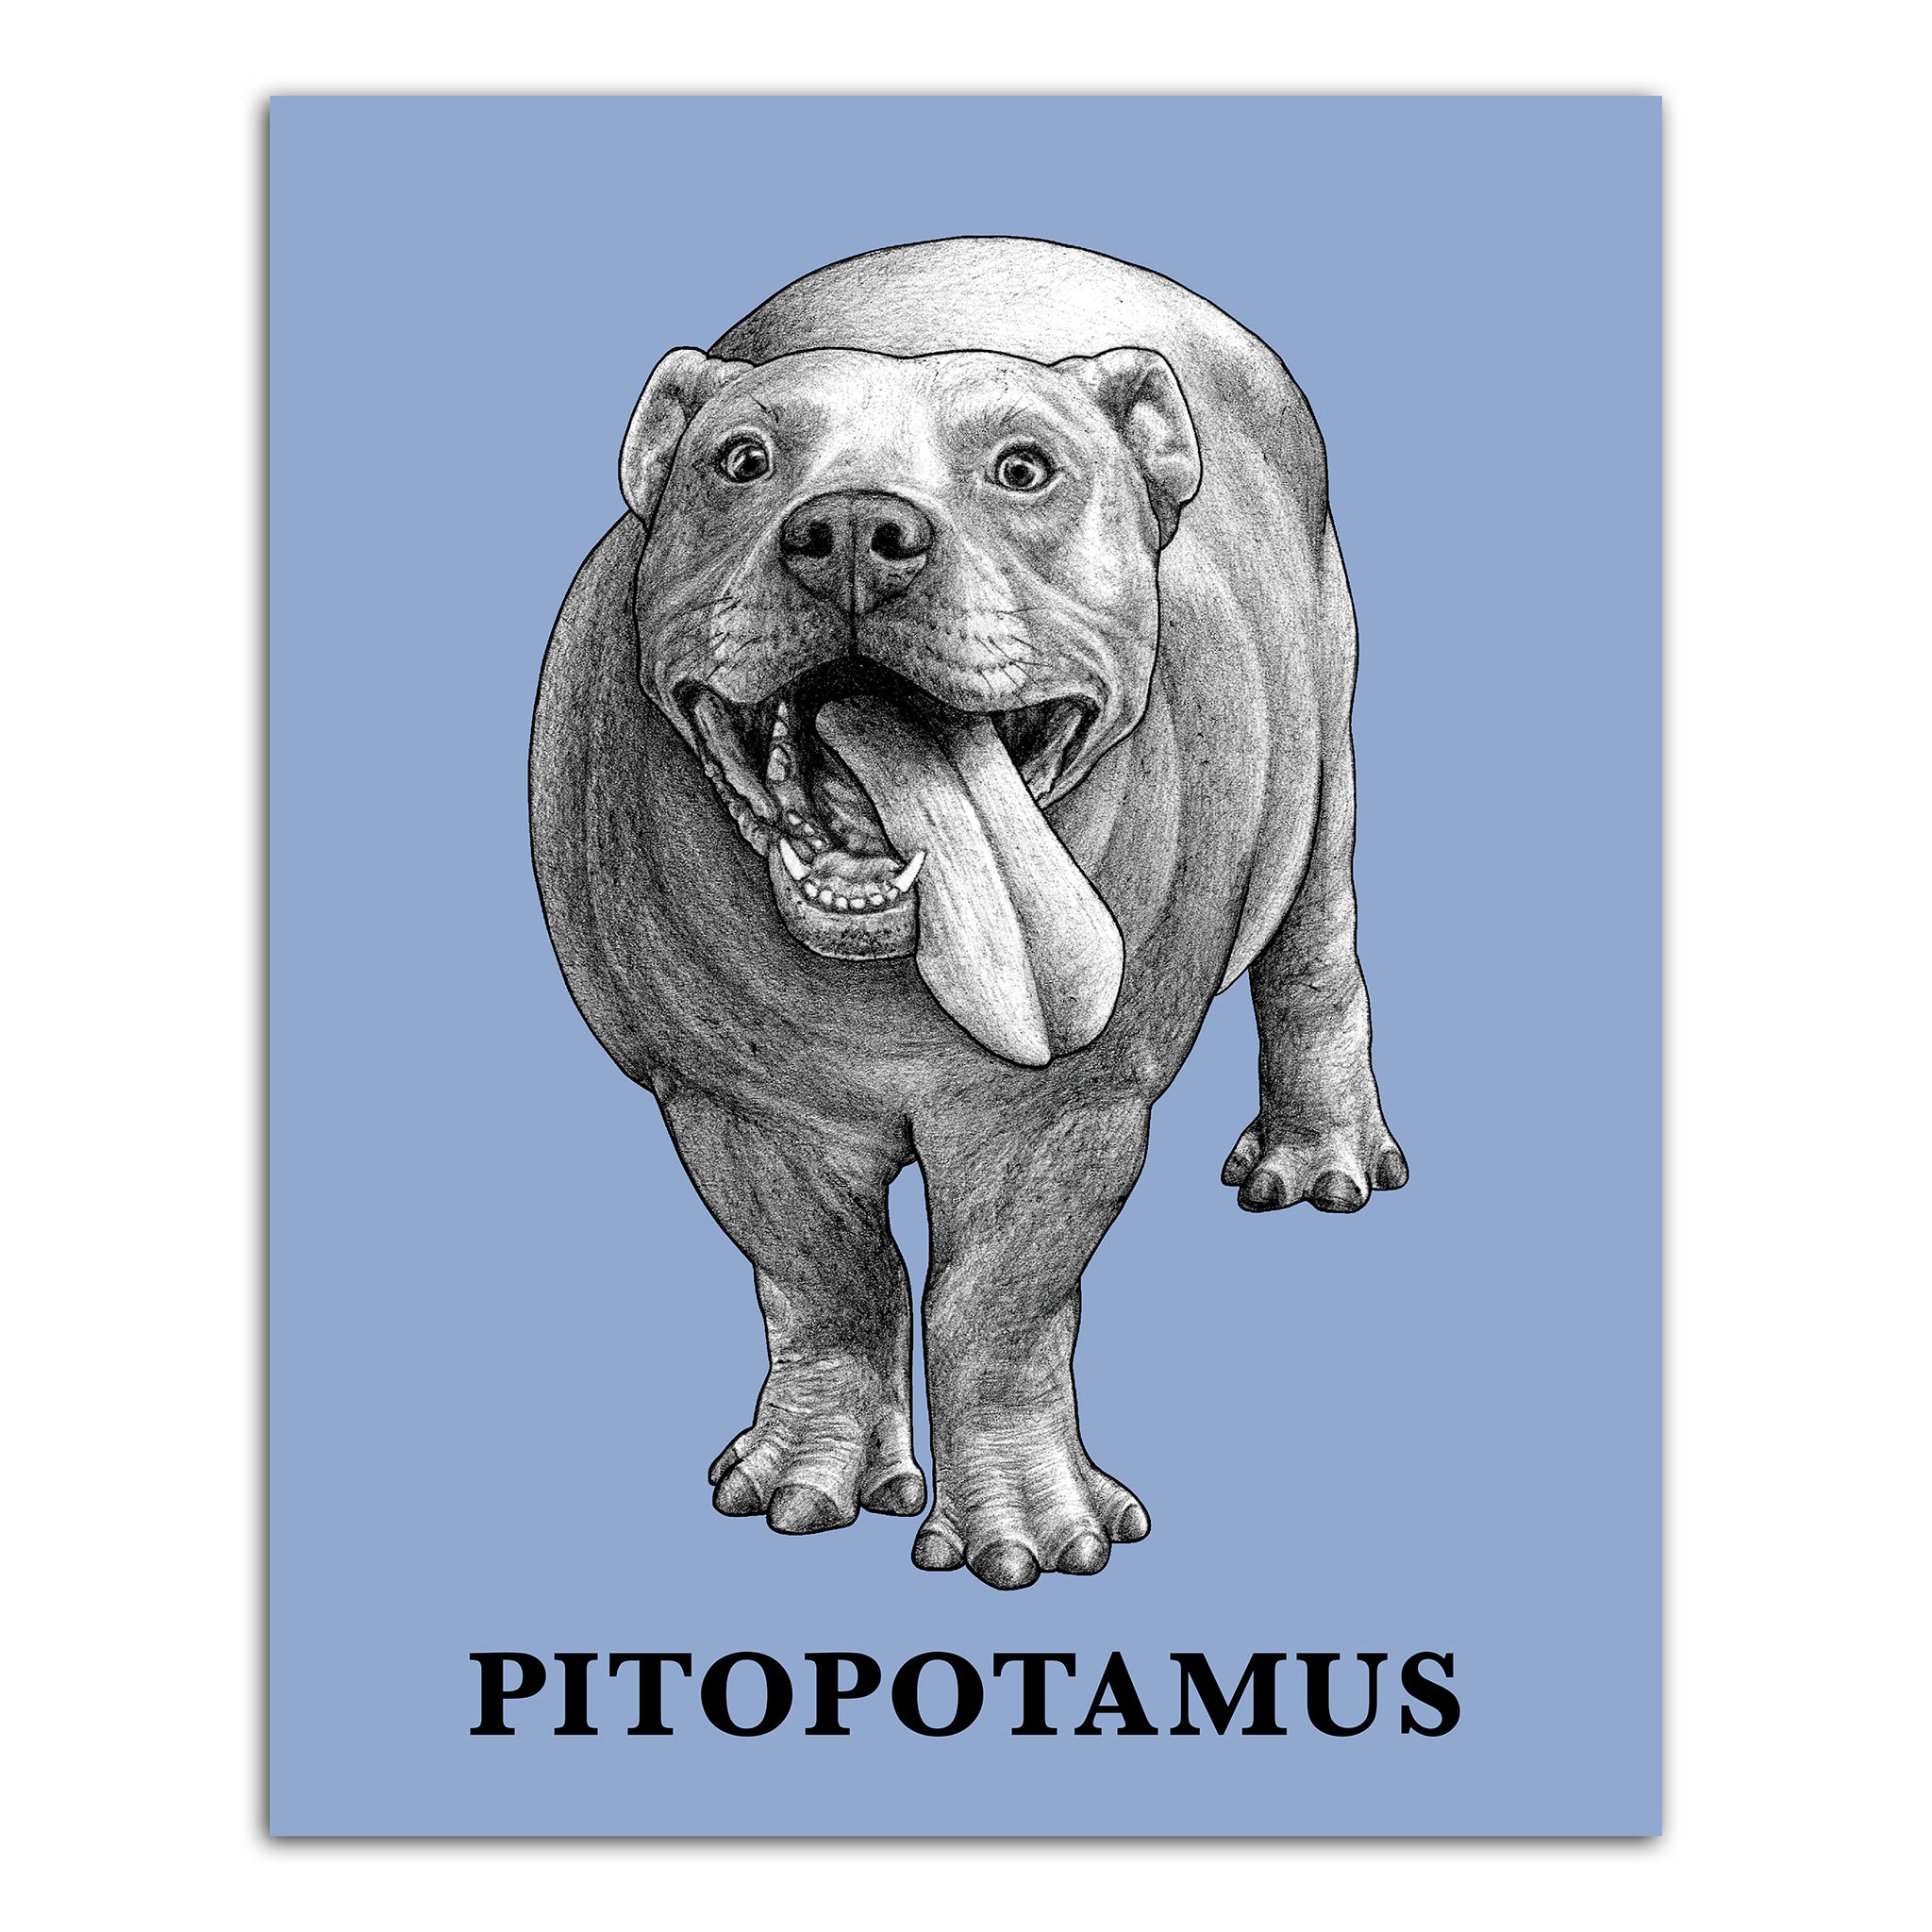 Pitopotamus | Pitbull + Hippopotamus Hybrid Animal | 8x10" Color Print